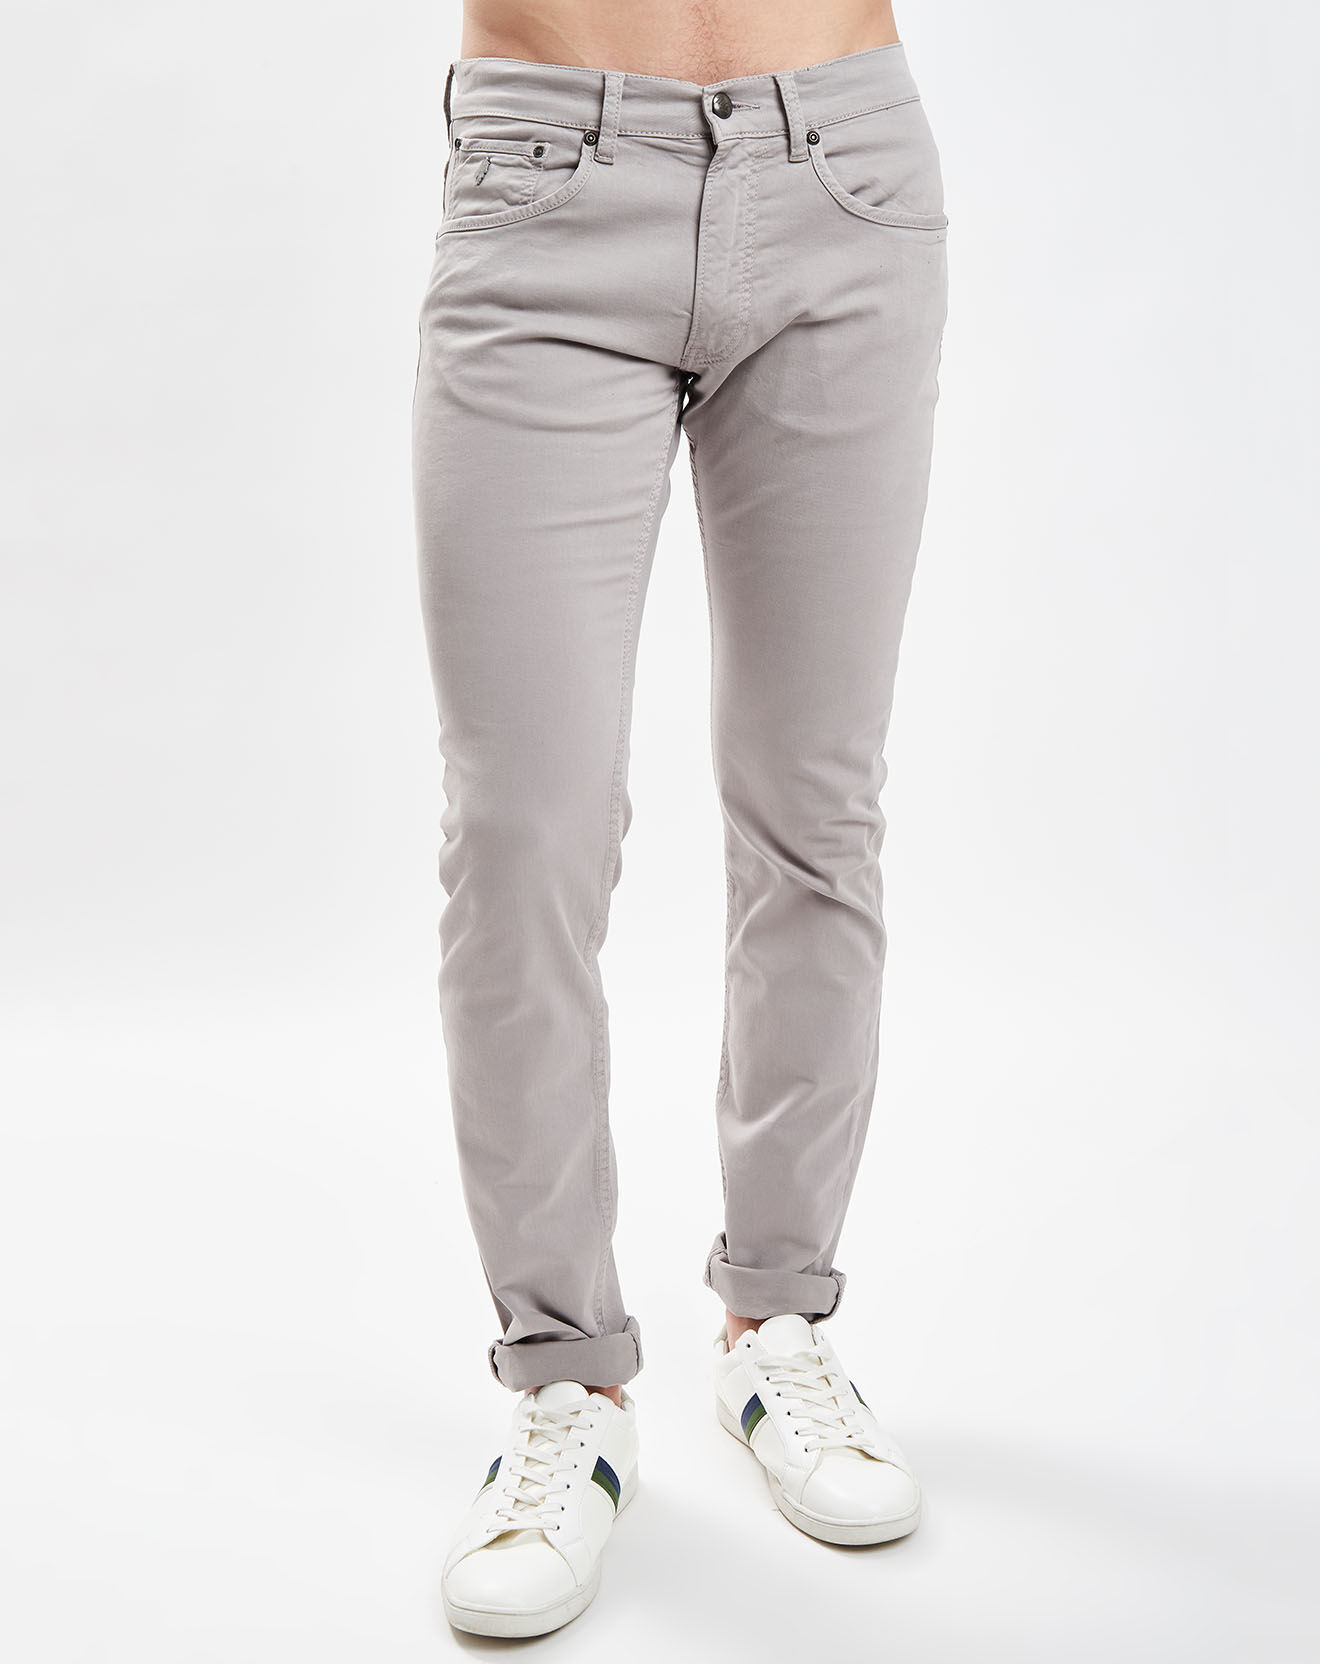 Pantalon 5 poches gris clair